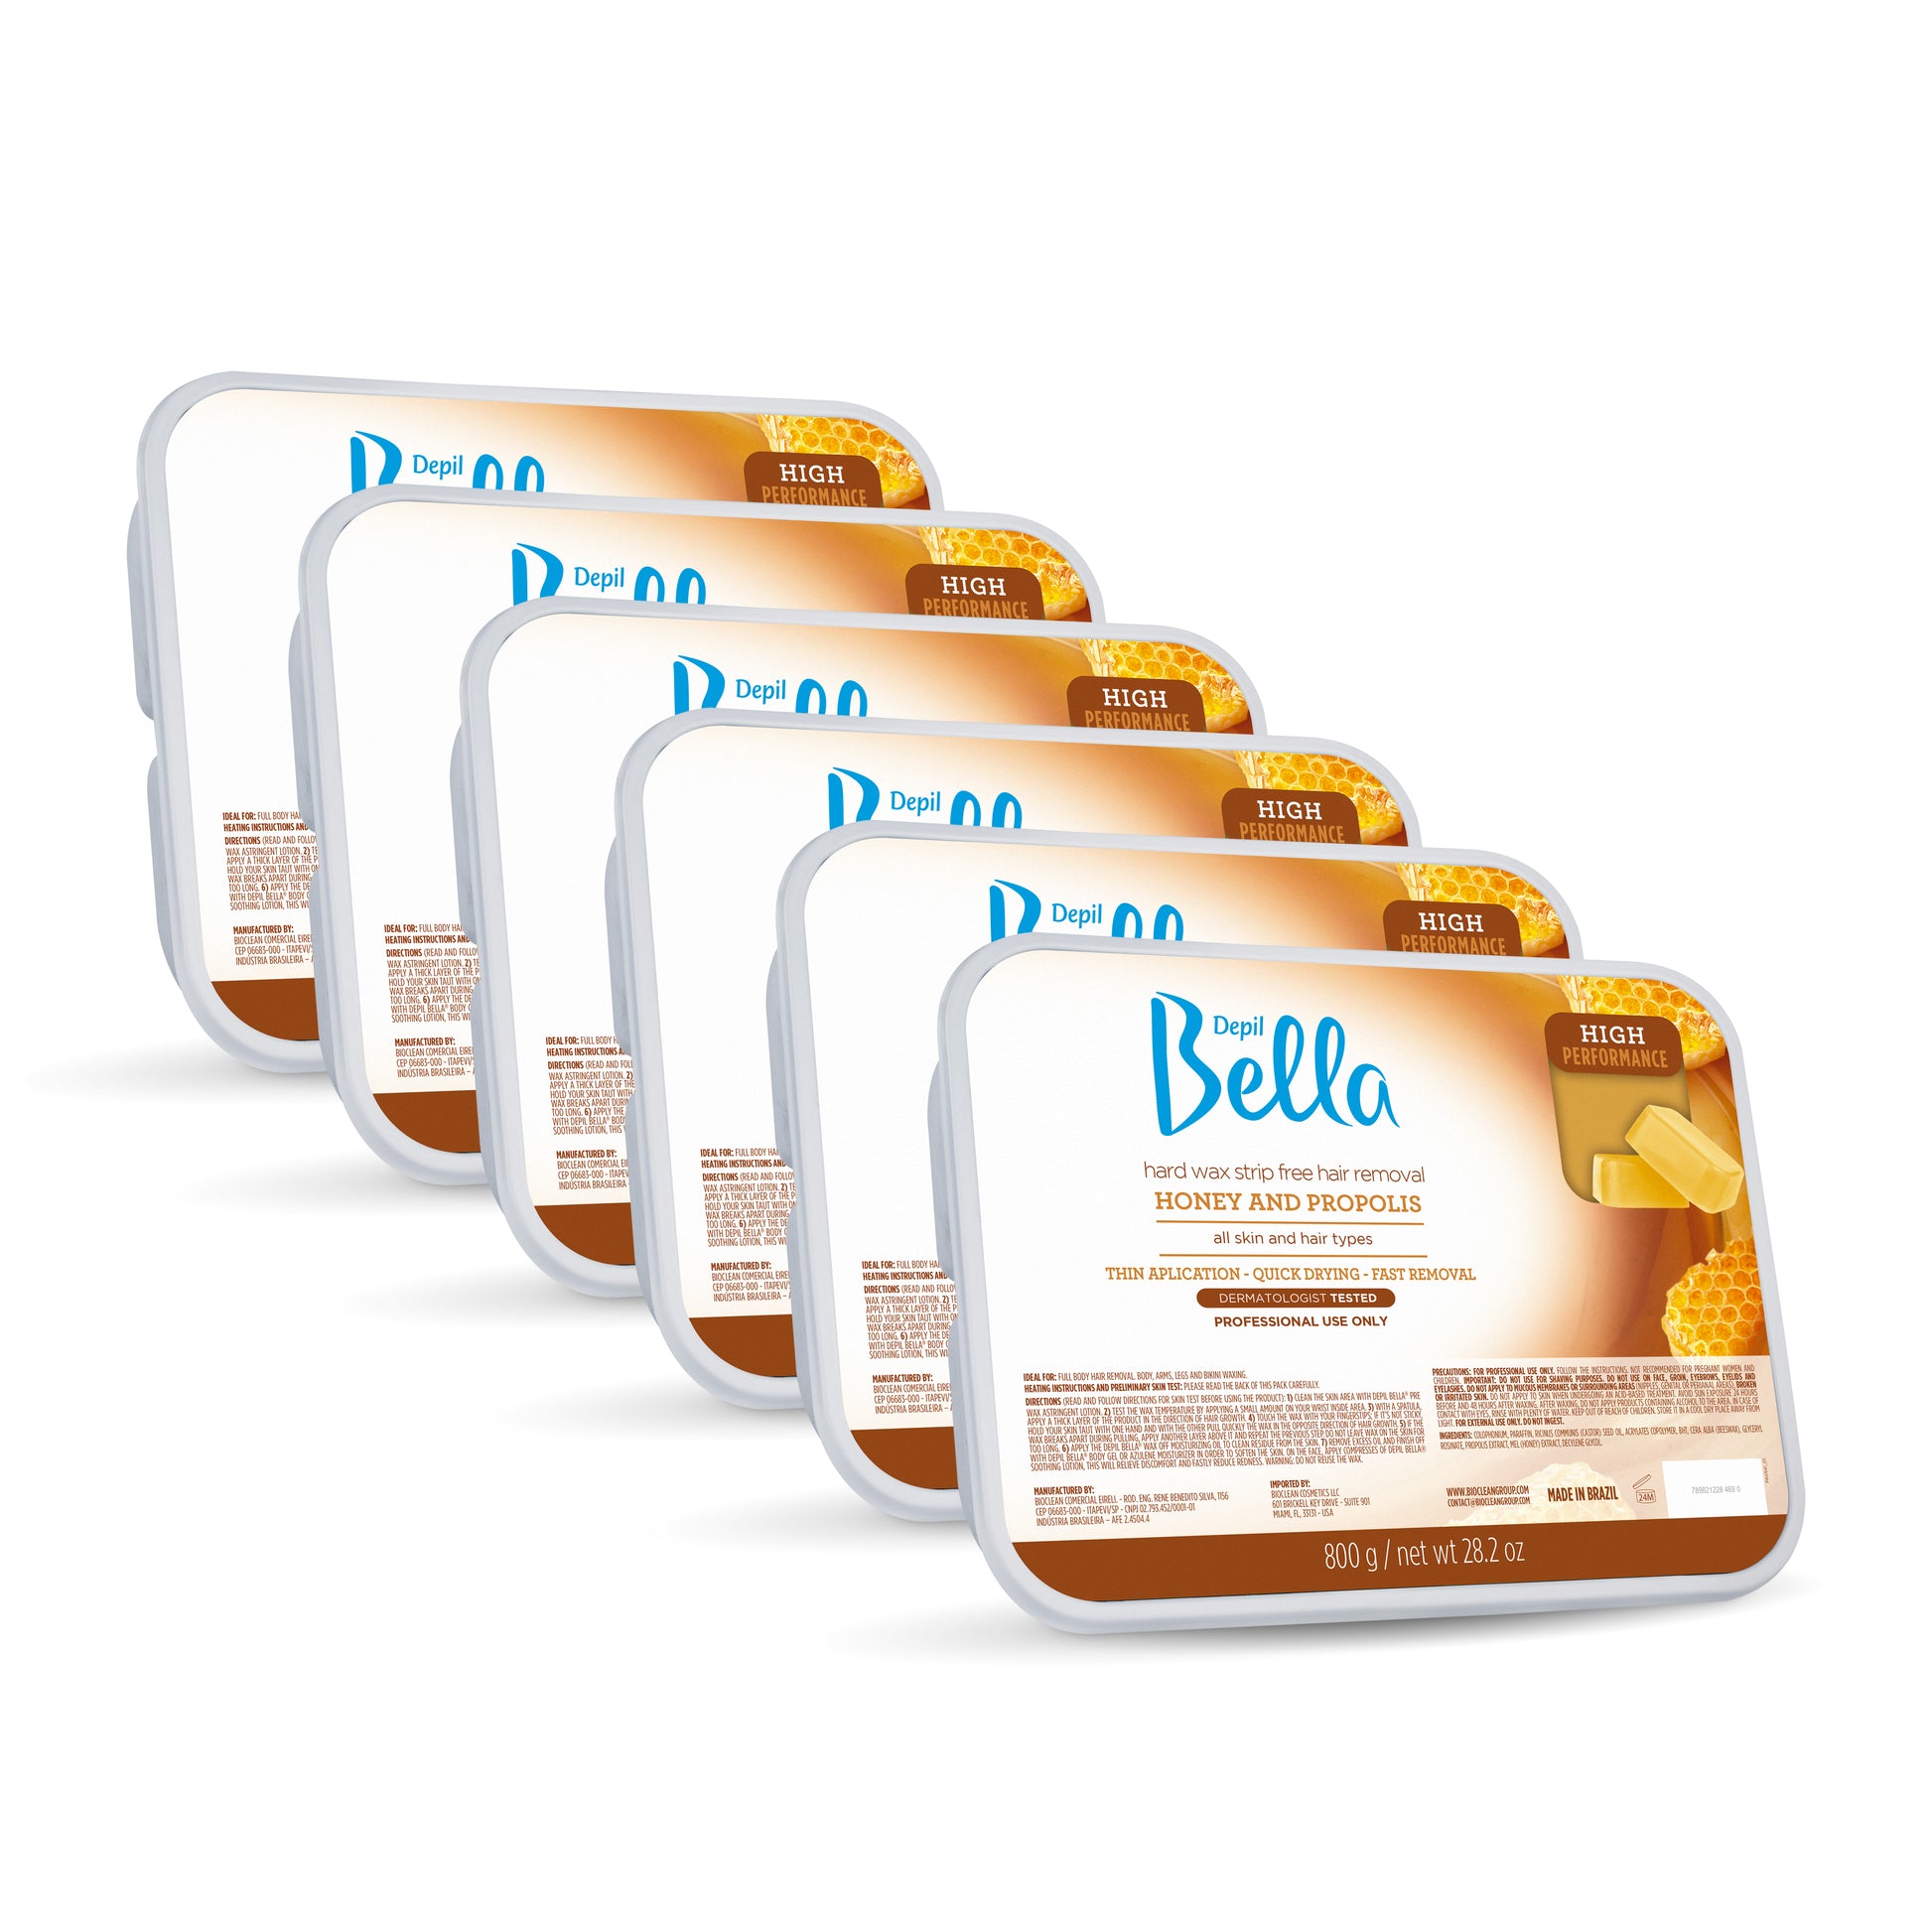 Depil Bella High Performance Hard wax Honey with propolis 28.2 Oz (6 Units Offer) - Depilcompany